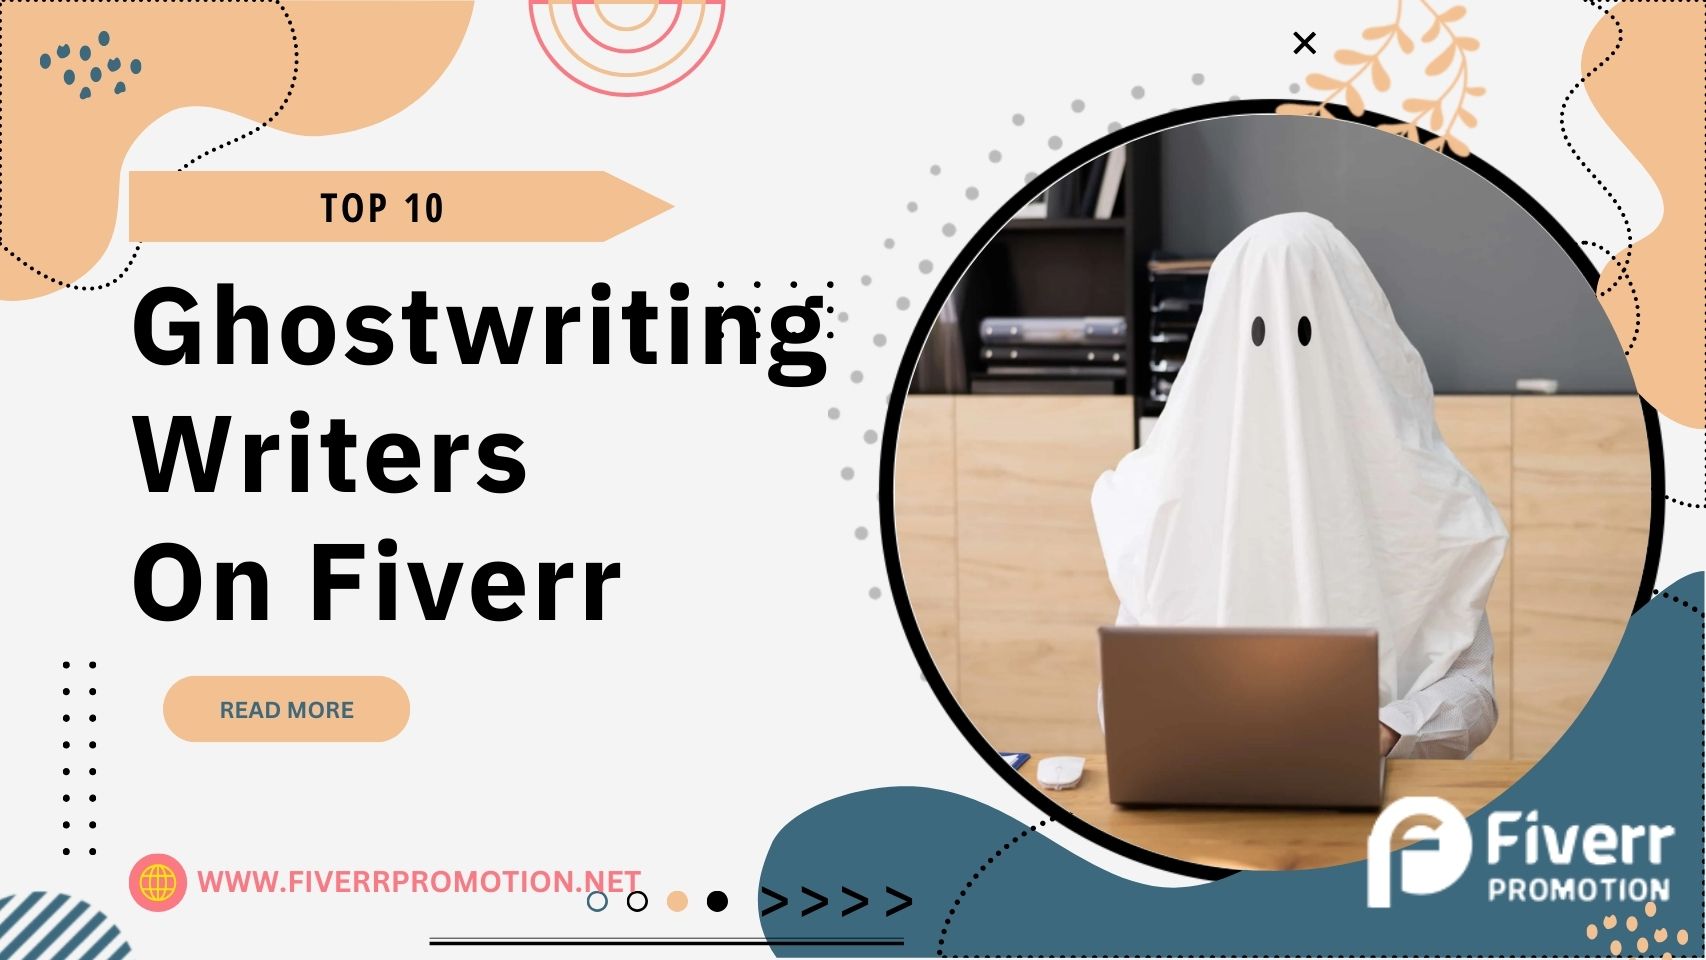 Top 10 Ghostwriting Writers on Fiverr